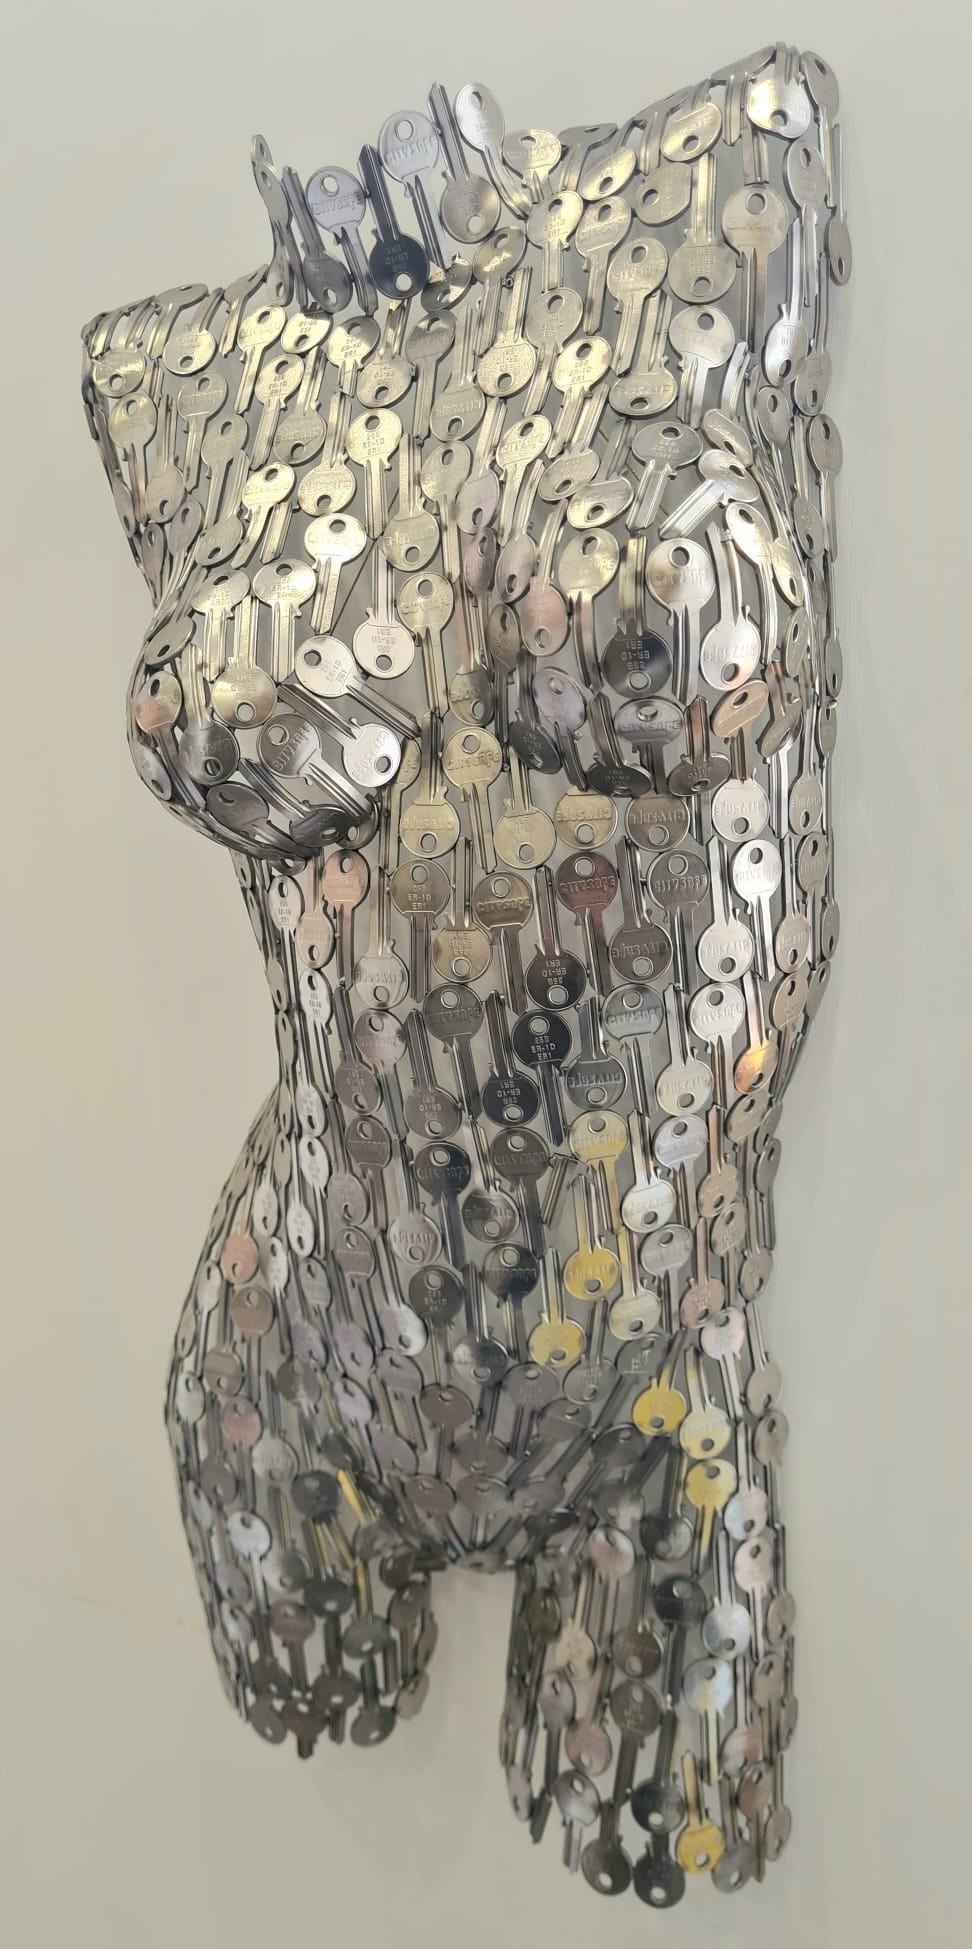 Figurative Sculpture Shaun Gagg - Torse de femme, porte-clés mural